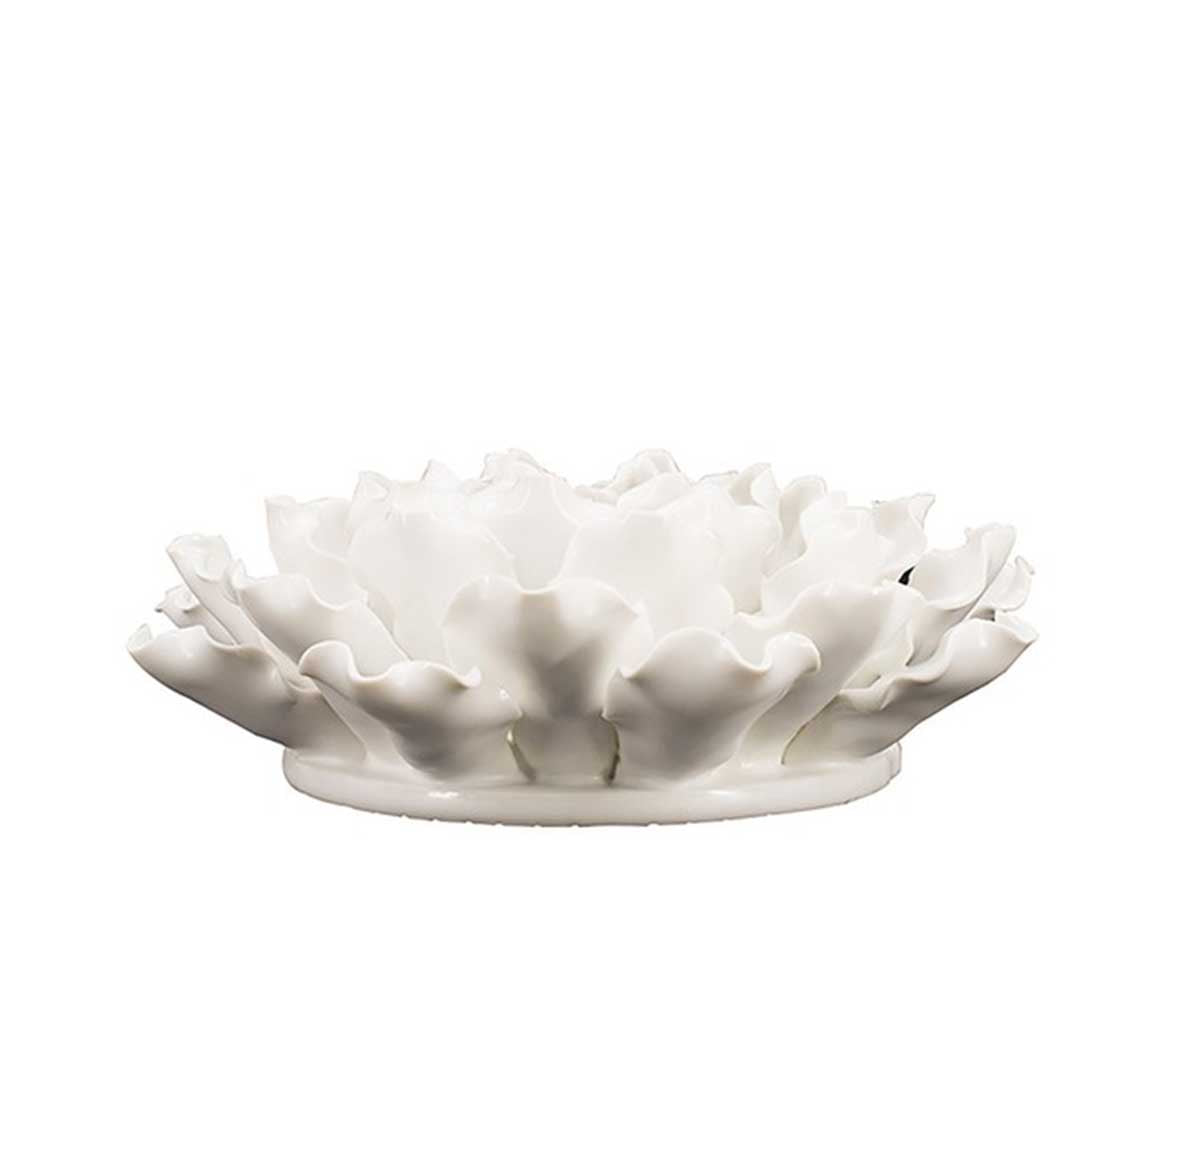 Ceramic 3D Flower Wall Hanging Decor Medium - Cream